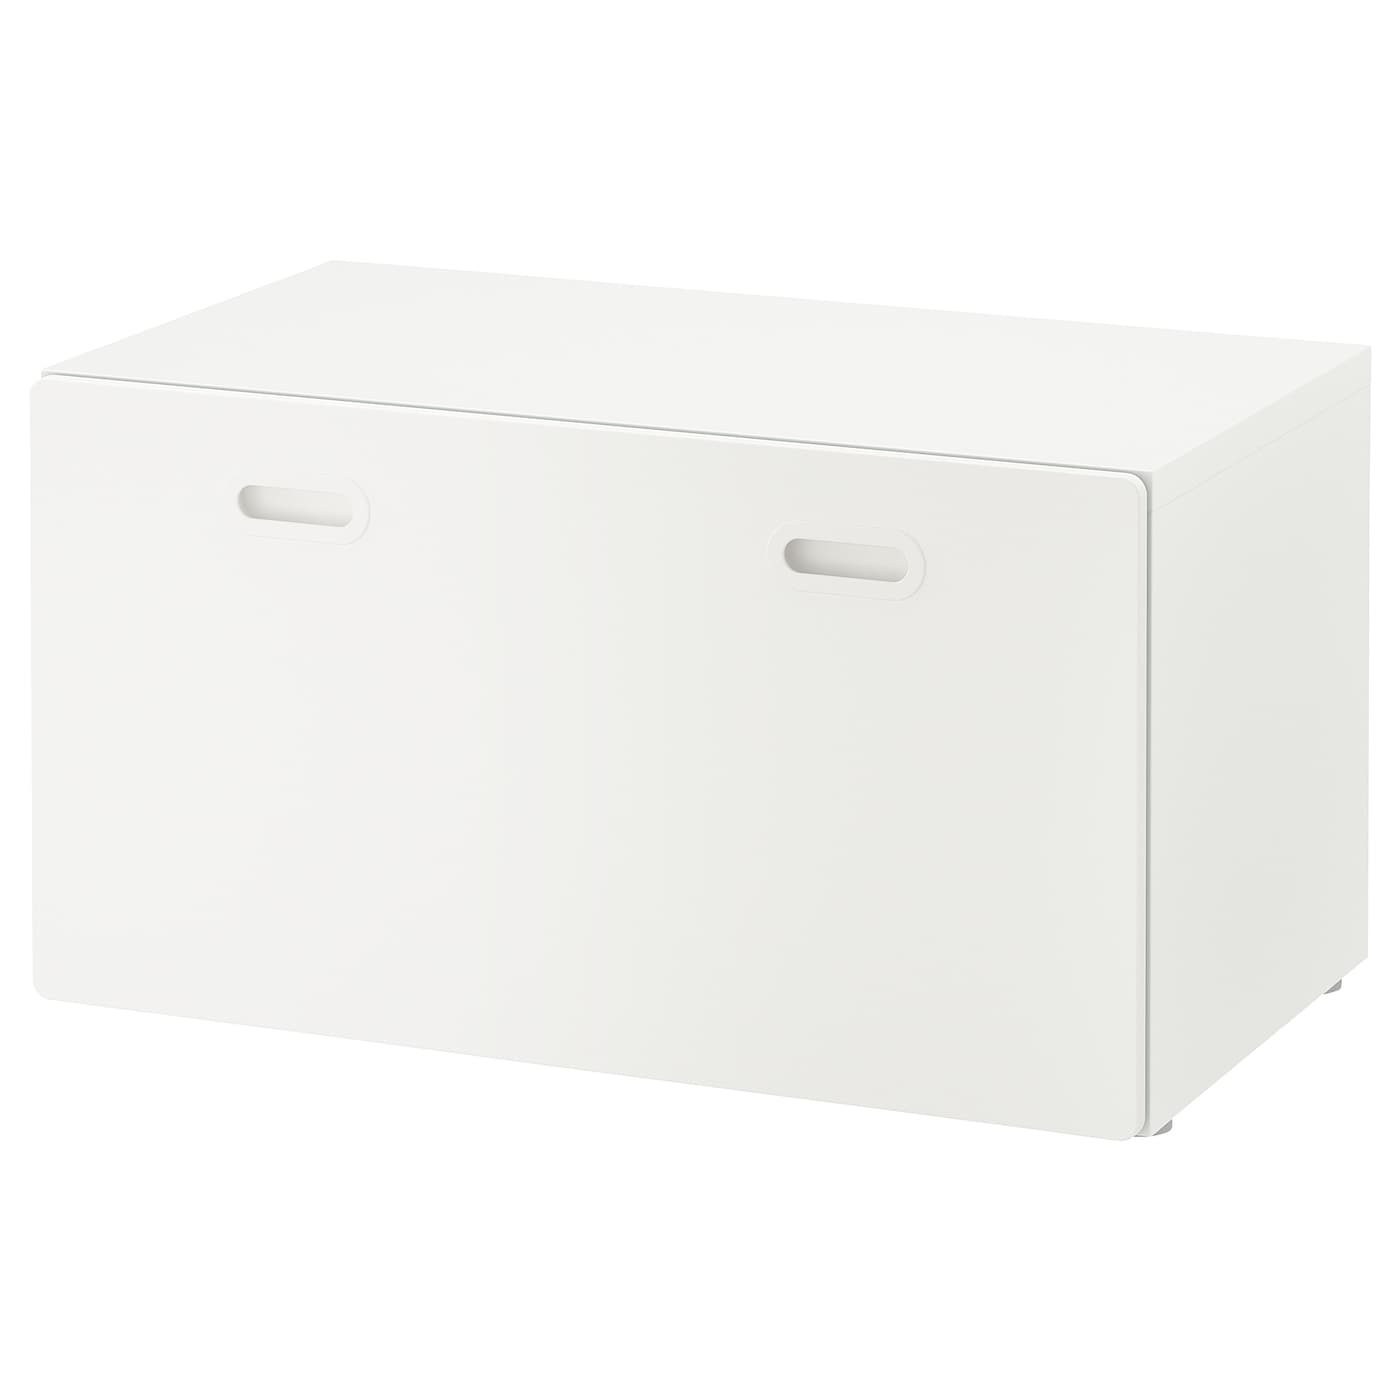 STUVA / FRITIDS Bench with toy storage white, white - IKEAPEDIA